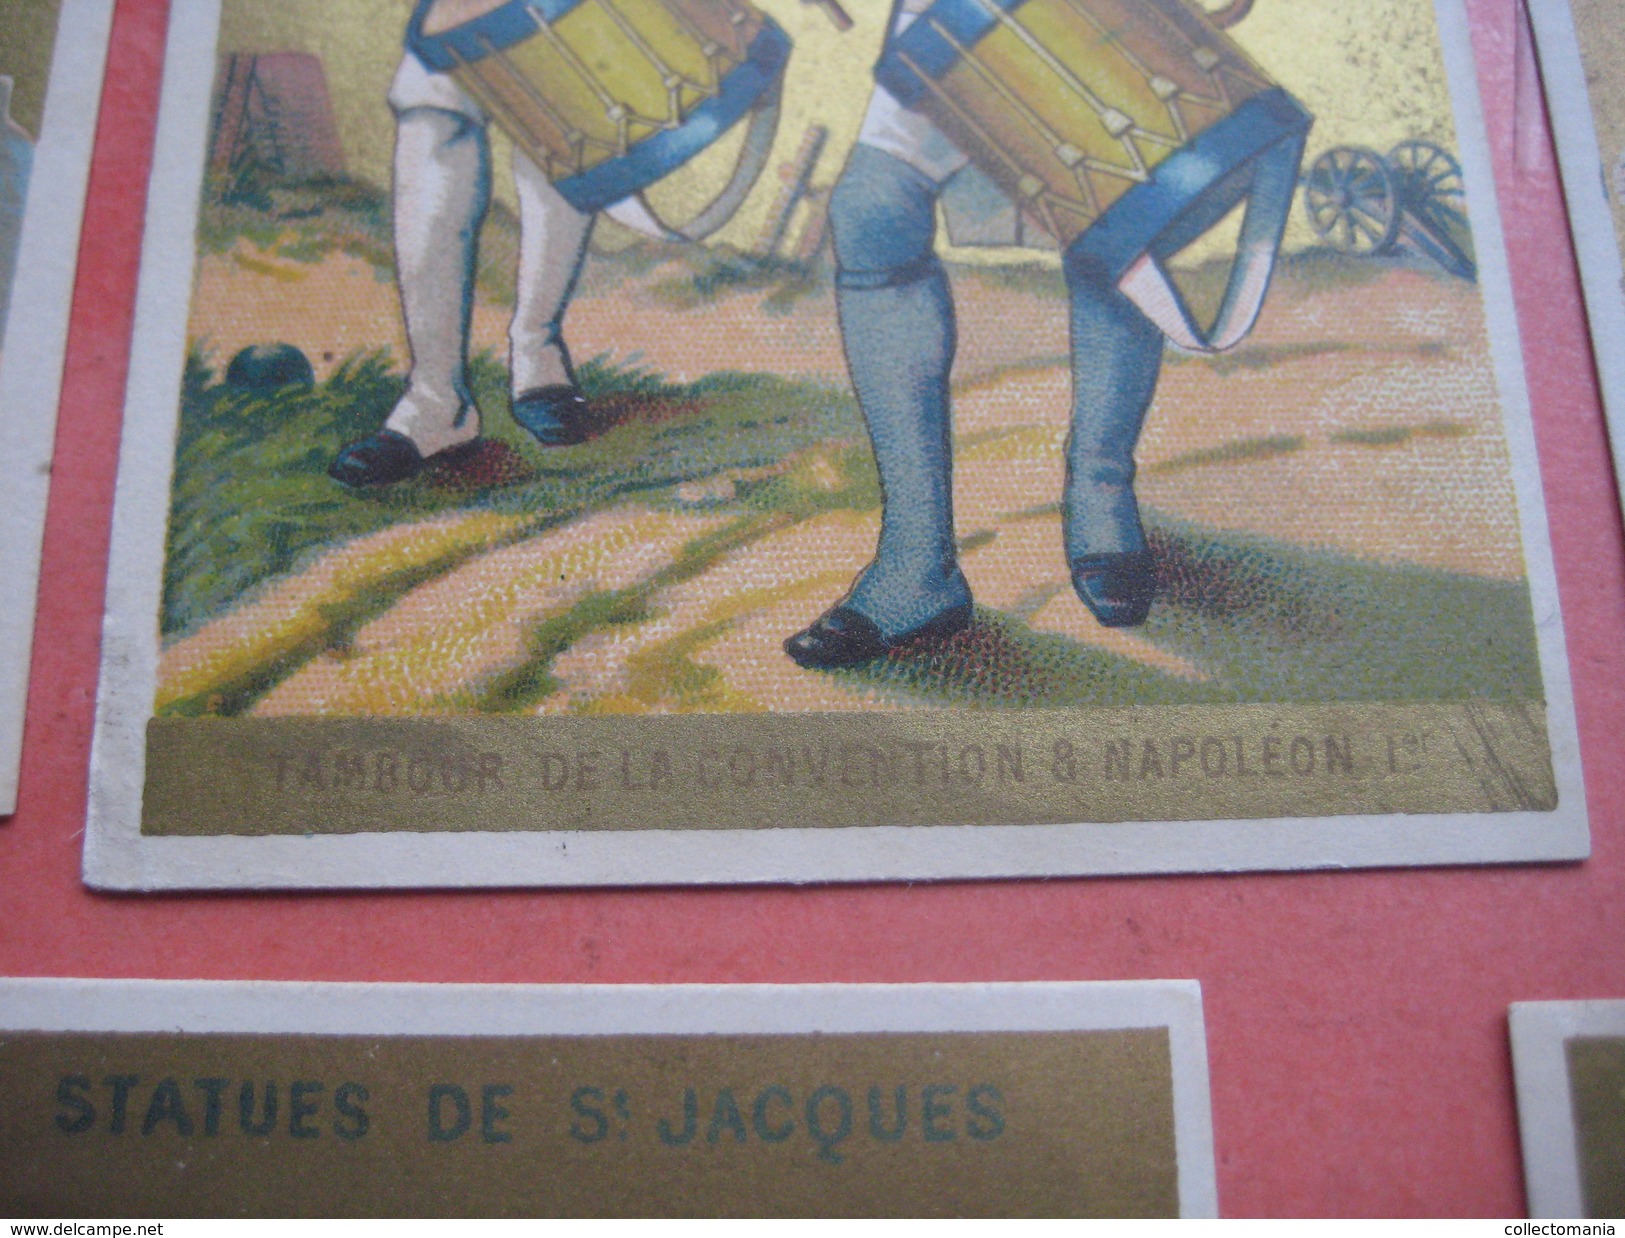 10 litho trade cards set  CR 2-2-1 impr Courbe Rouzet PUB Delorme VICHY  c1880  musique tambours militaires humor